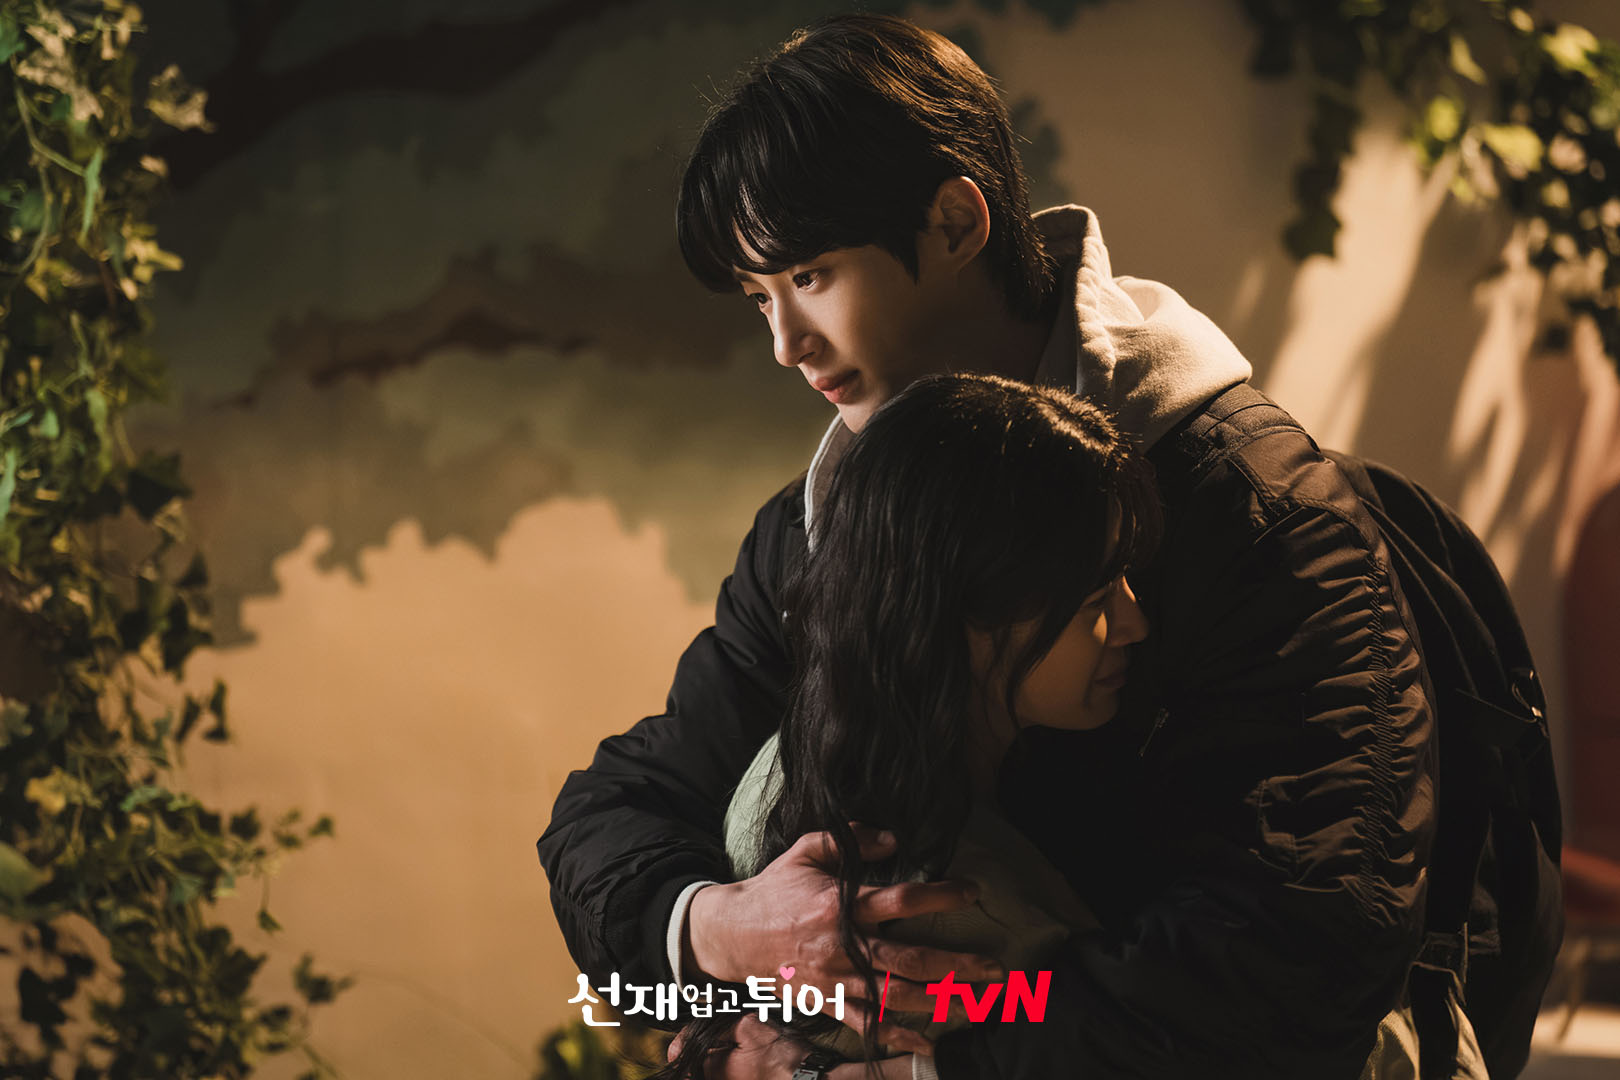 Byeon Woo Seok Is Loving Toward An Emotional Kim Hye Yoon In 